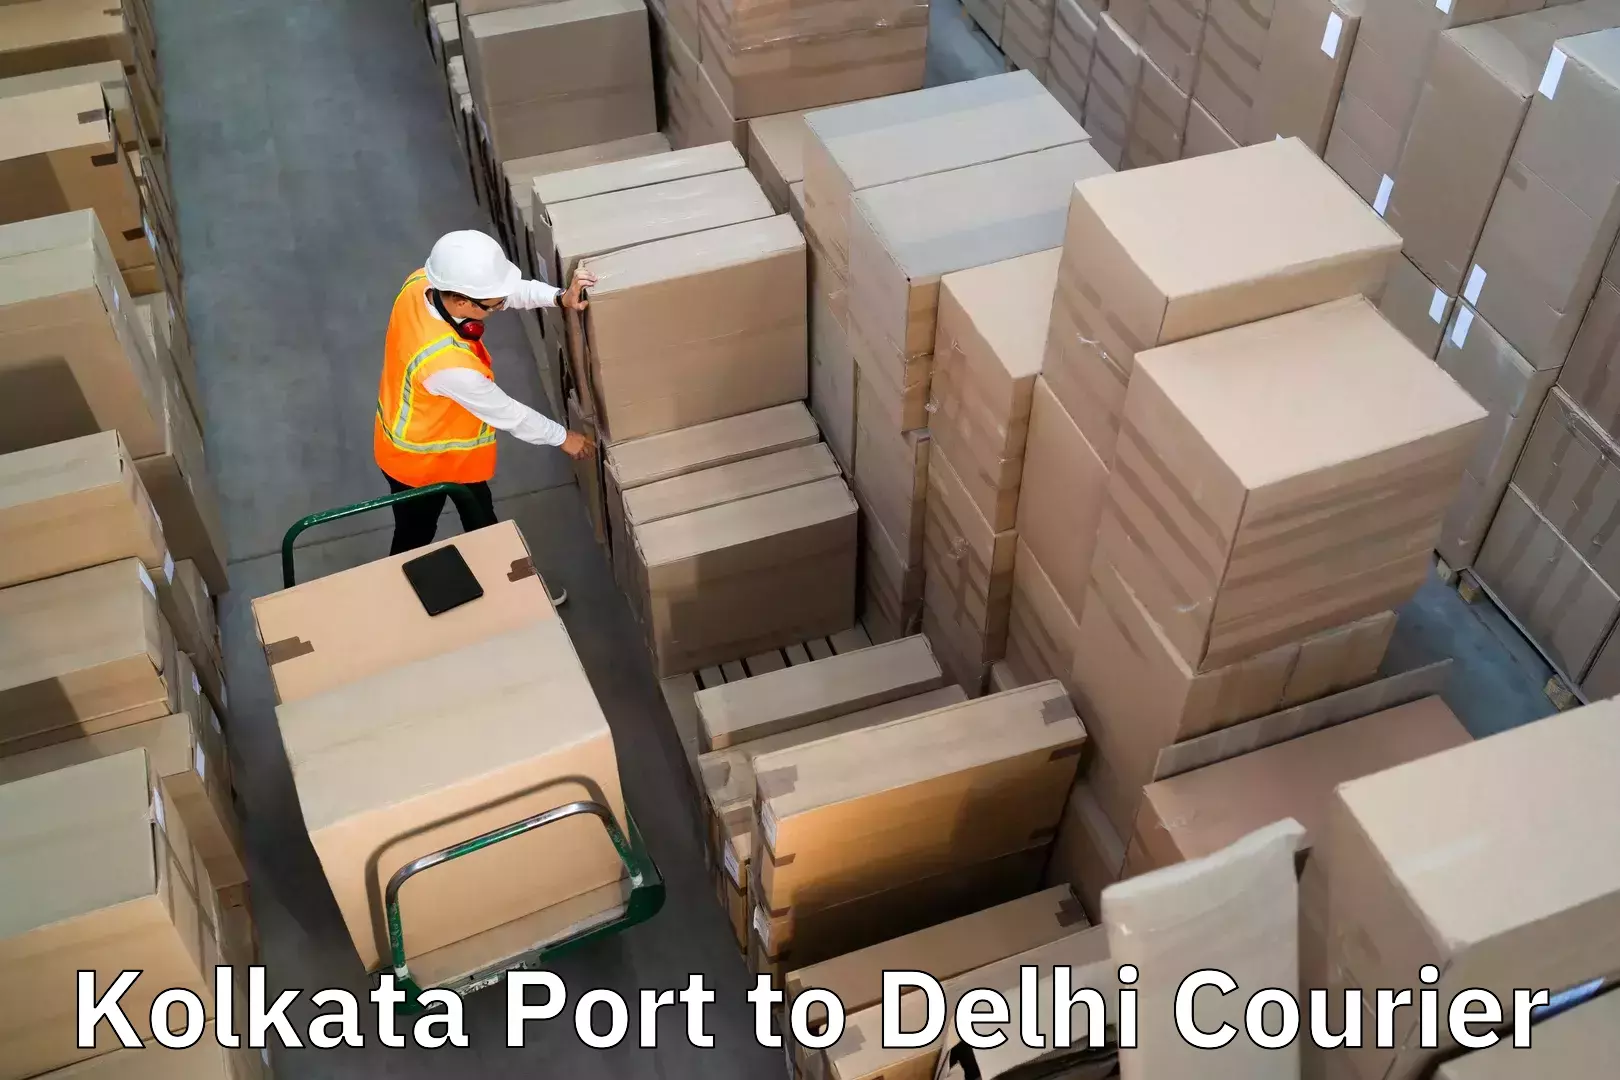 Baggage transport network Kolkata Port to Sarojini Nagar